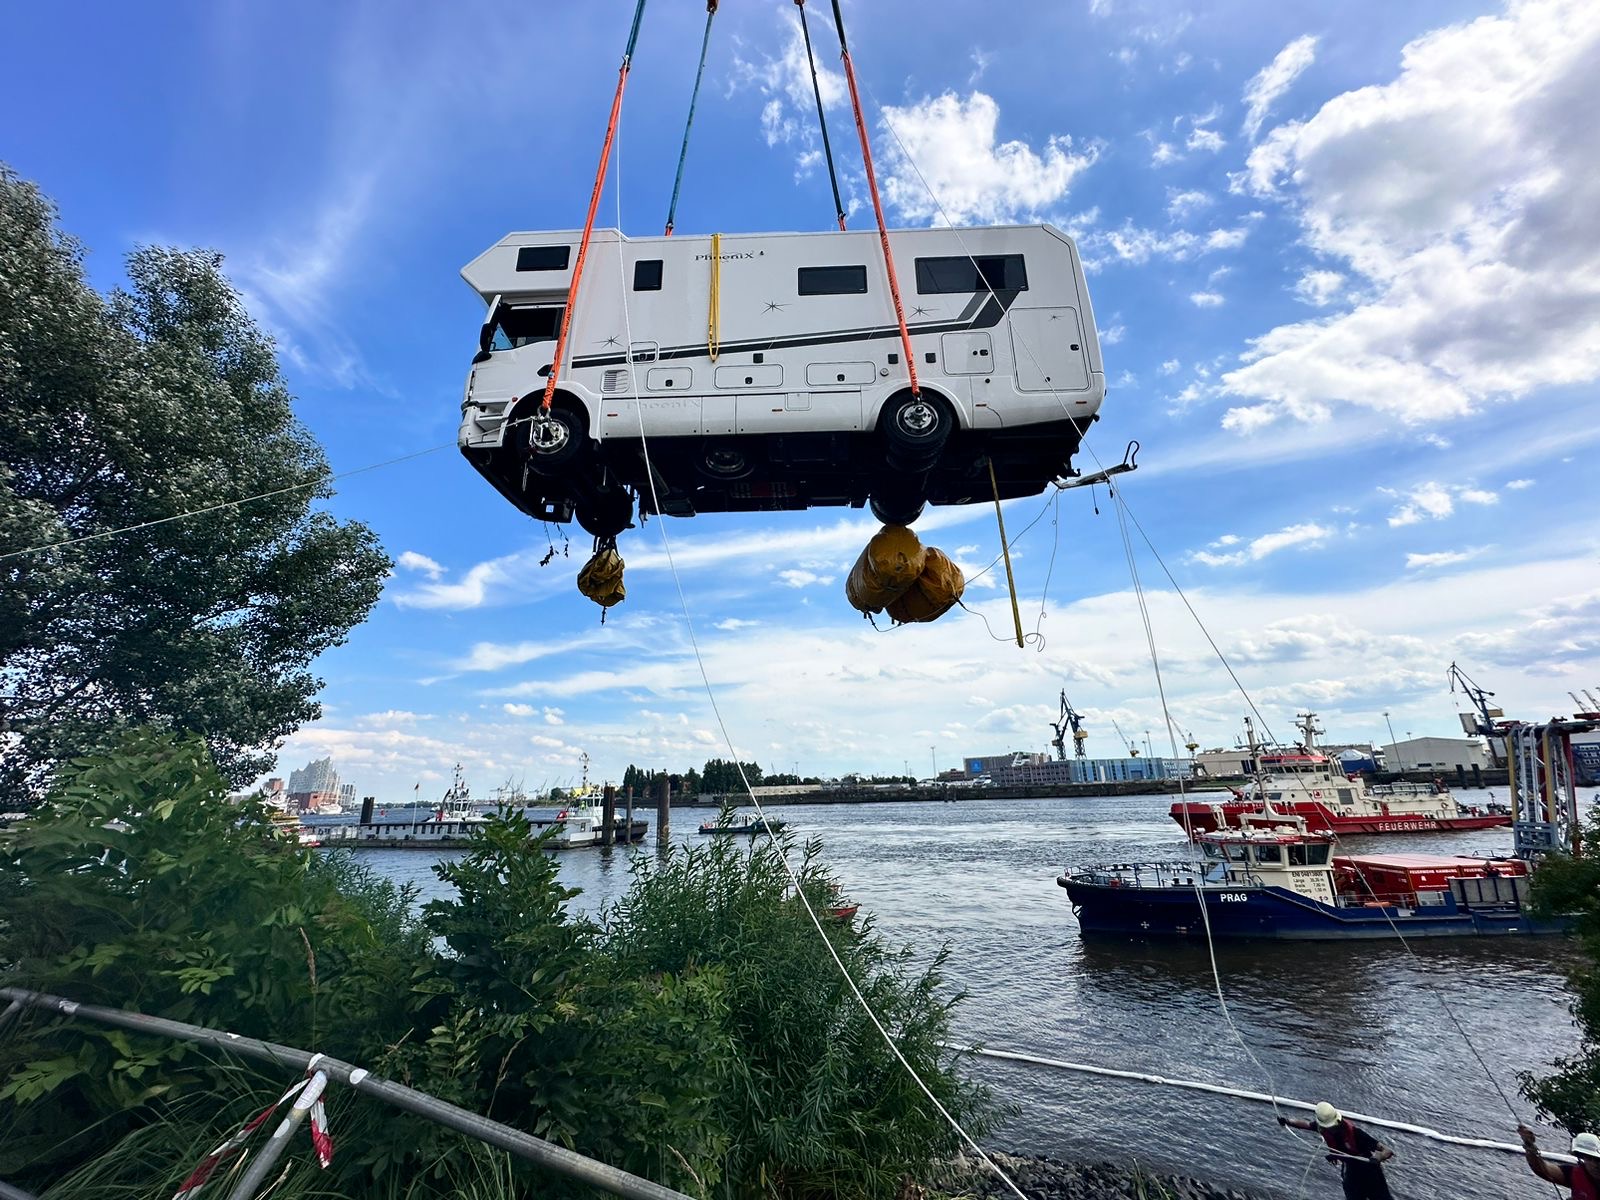 Schweizer ehepaar versenkt teures Wohnmobil beim Rangieren am Fischmarkt in der Elbe – Aufwendiger Bergung